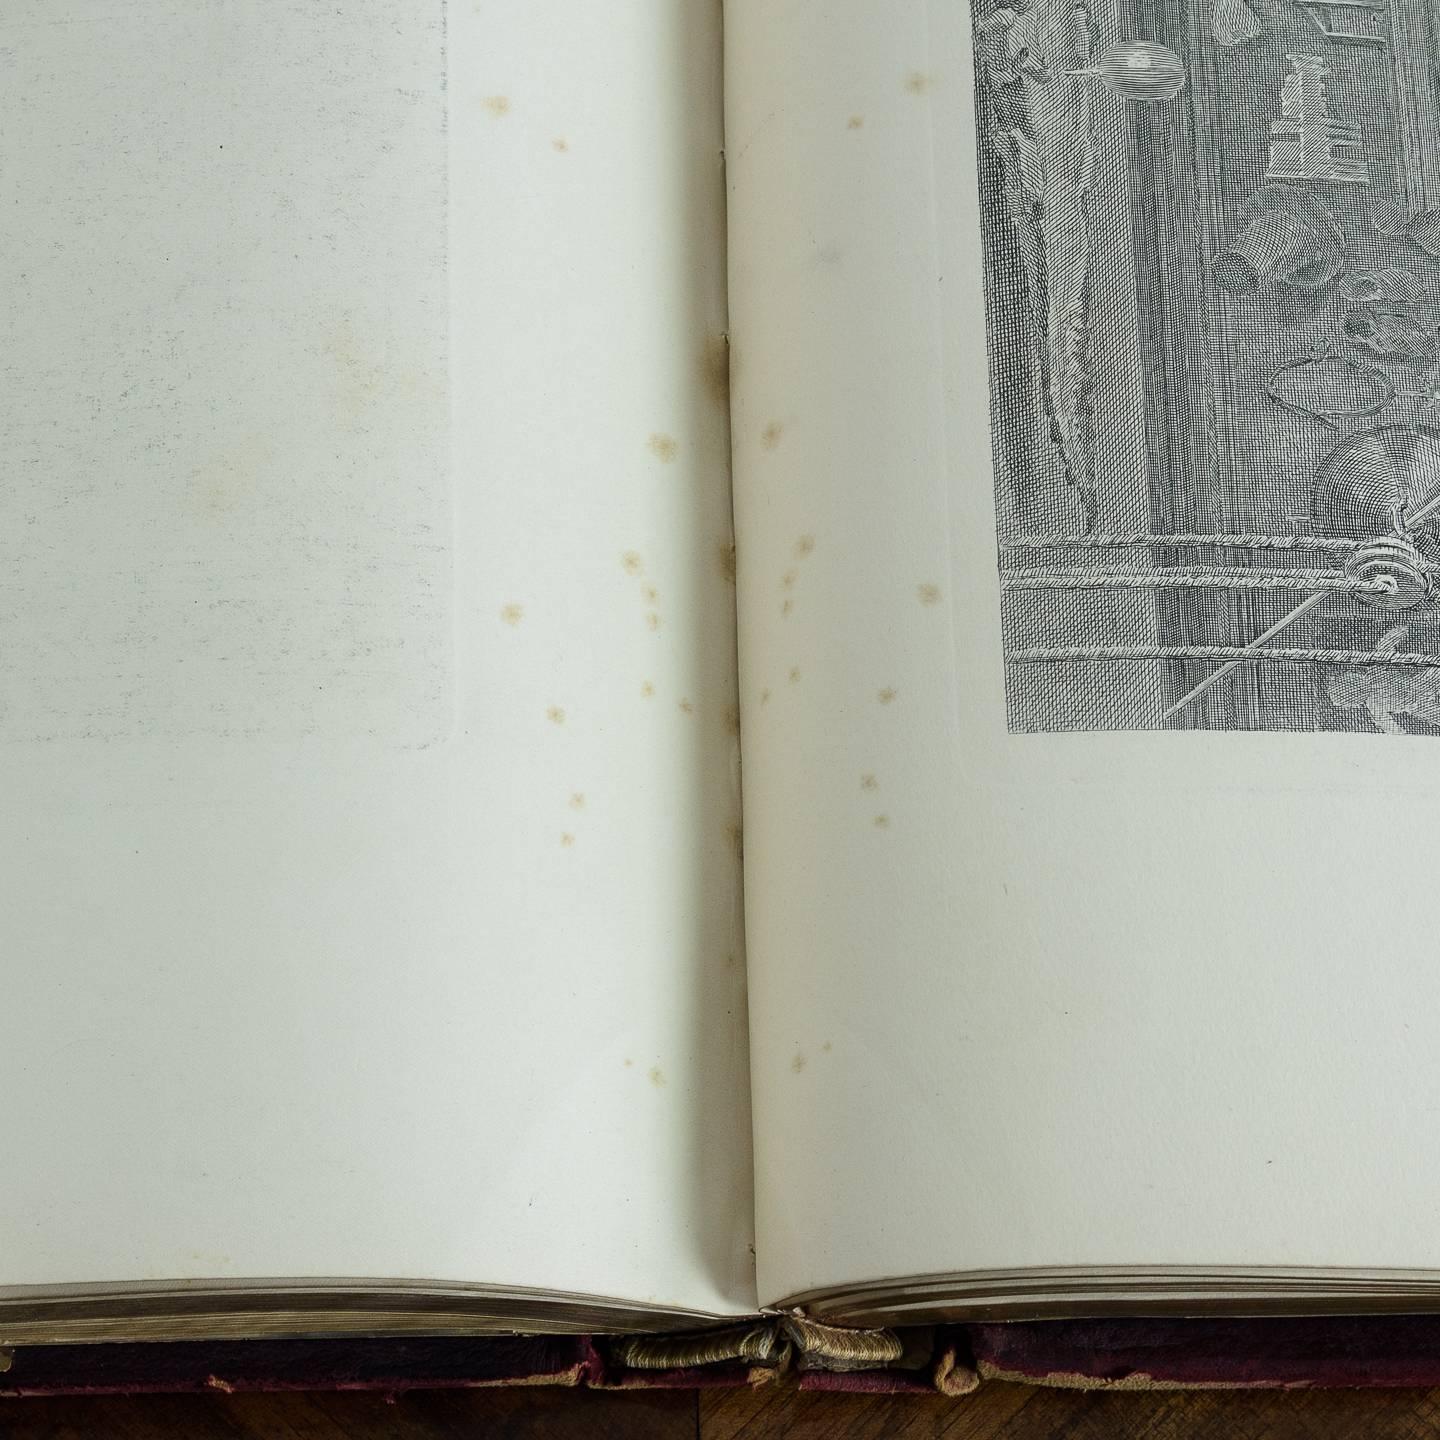 Works of Hogarth, Complete Folio, 1822 5